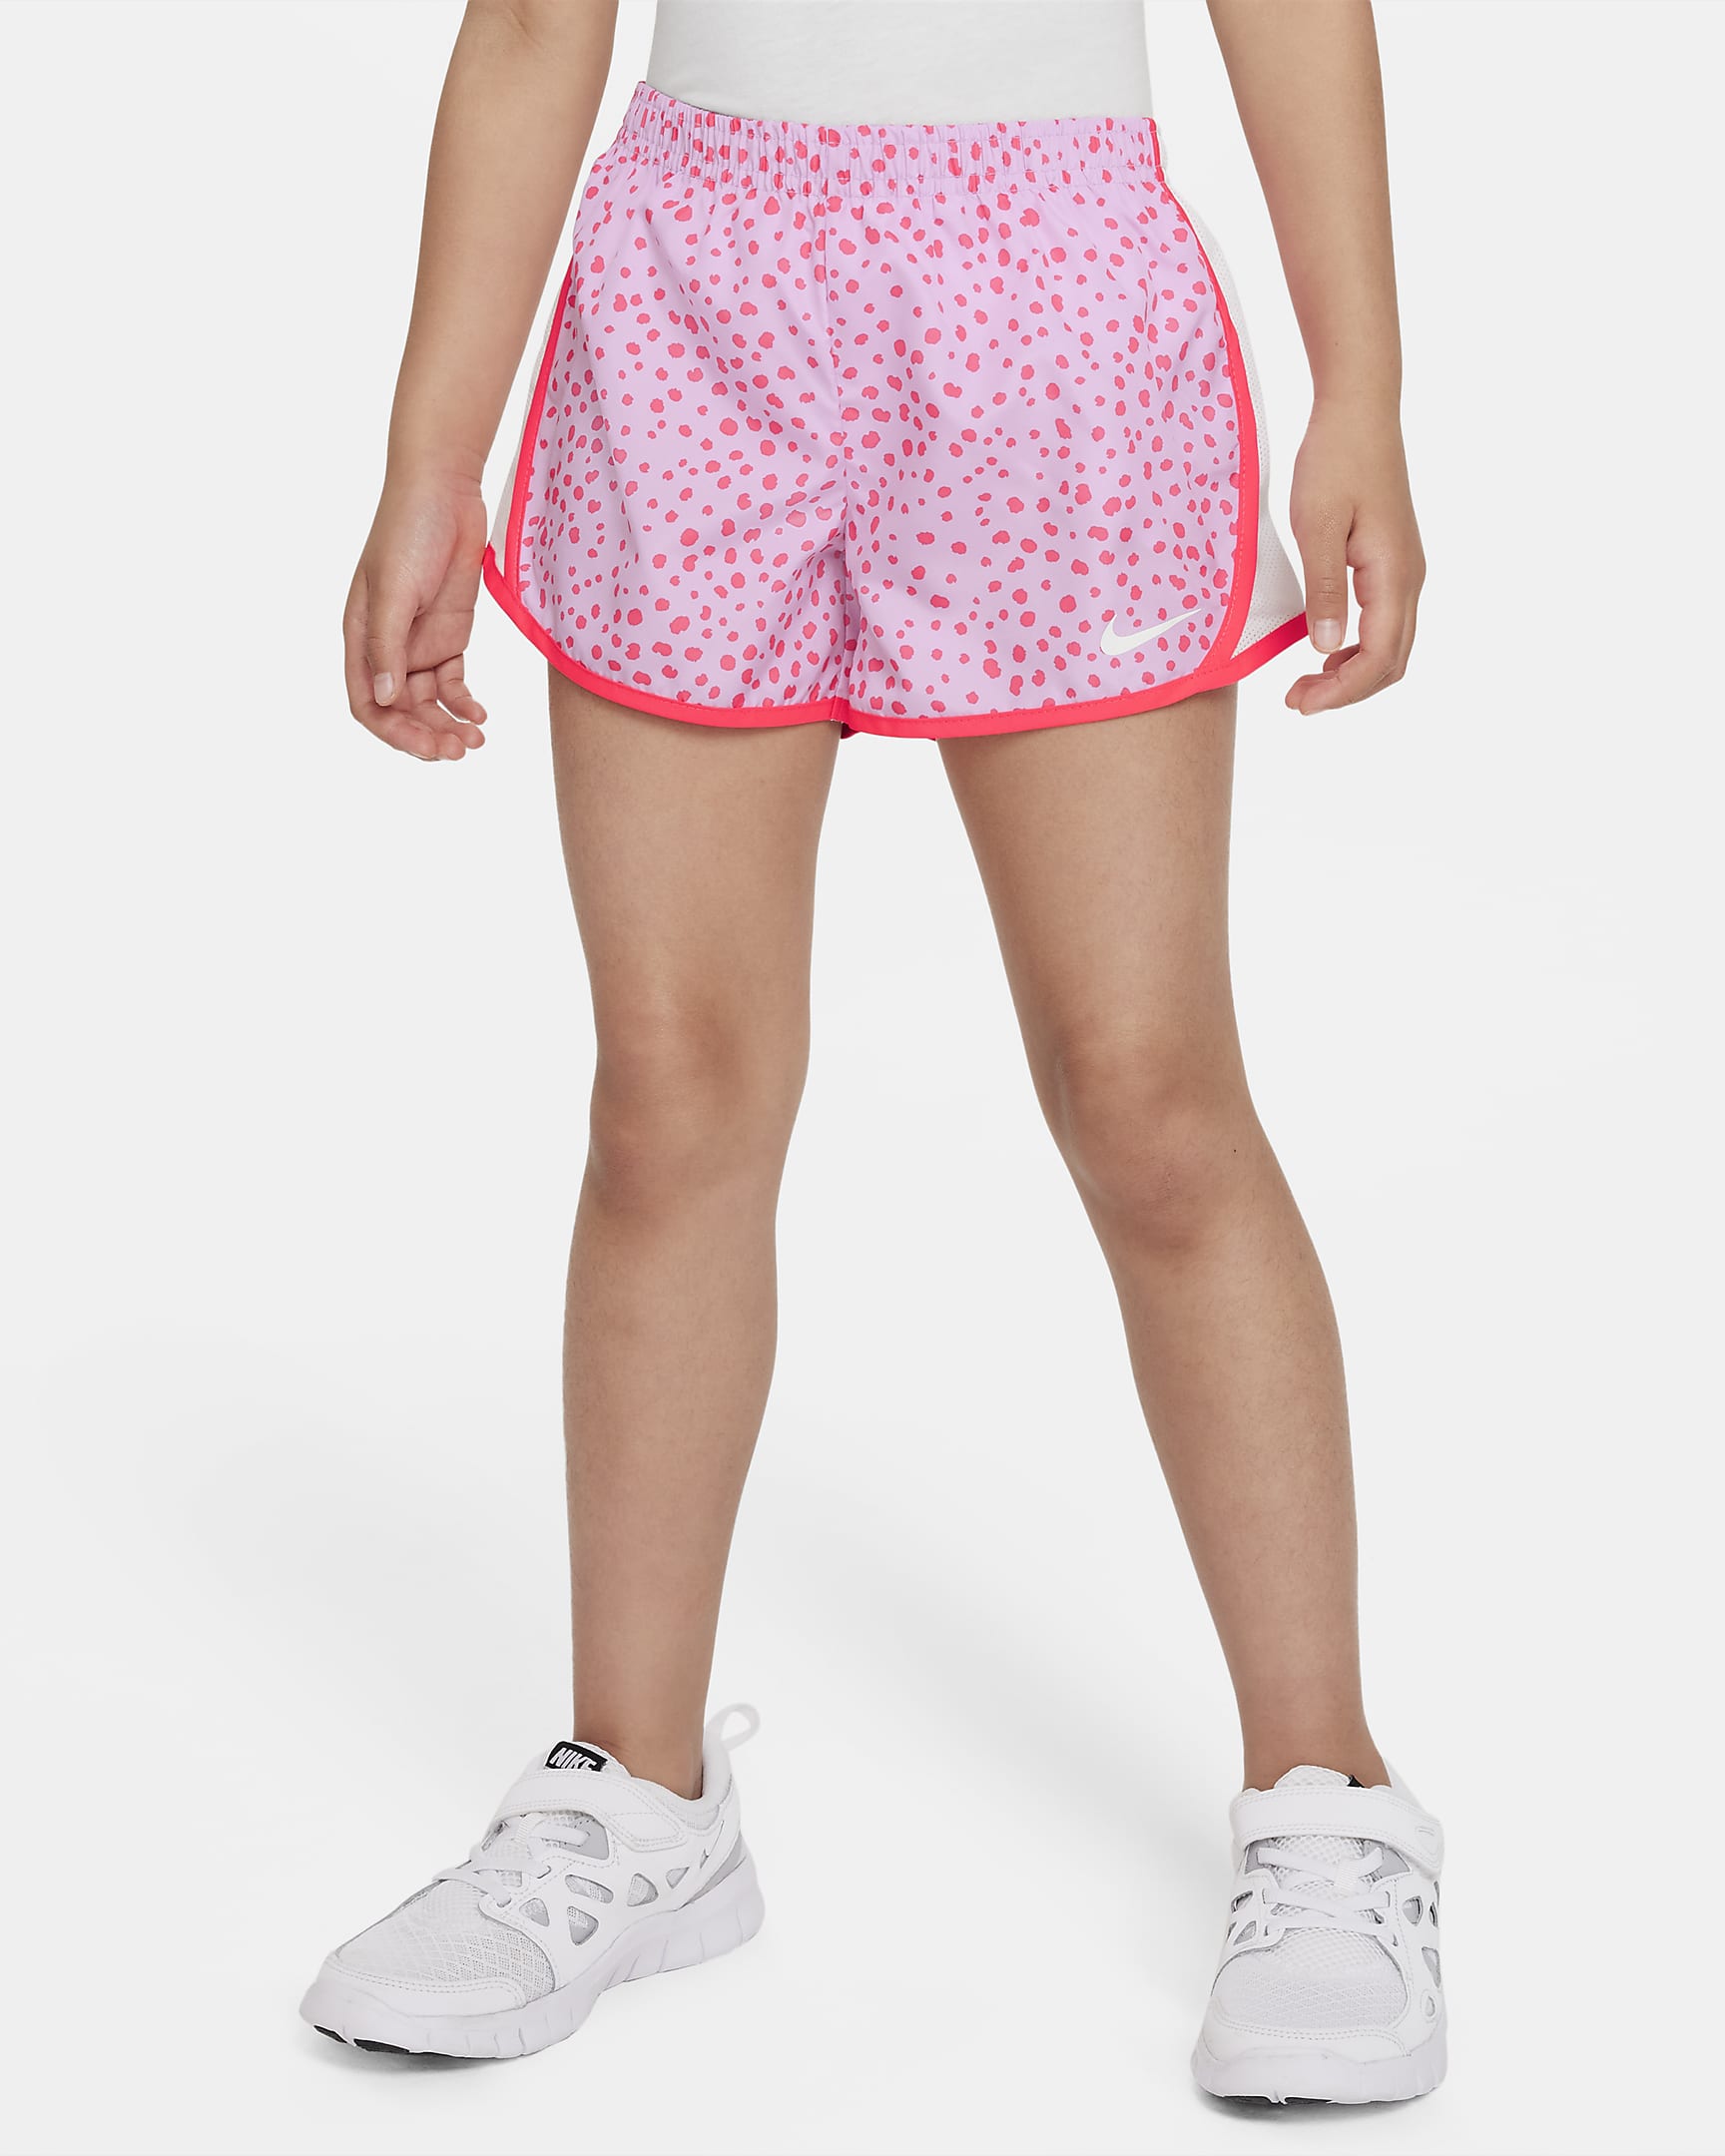 Nike Little Kids\' Shorts Doll